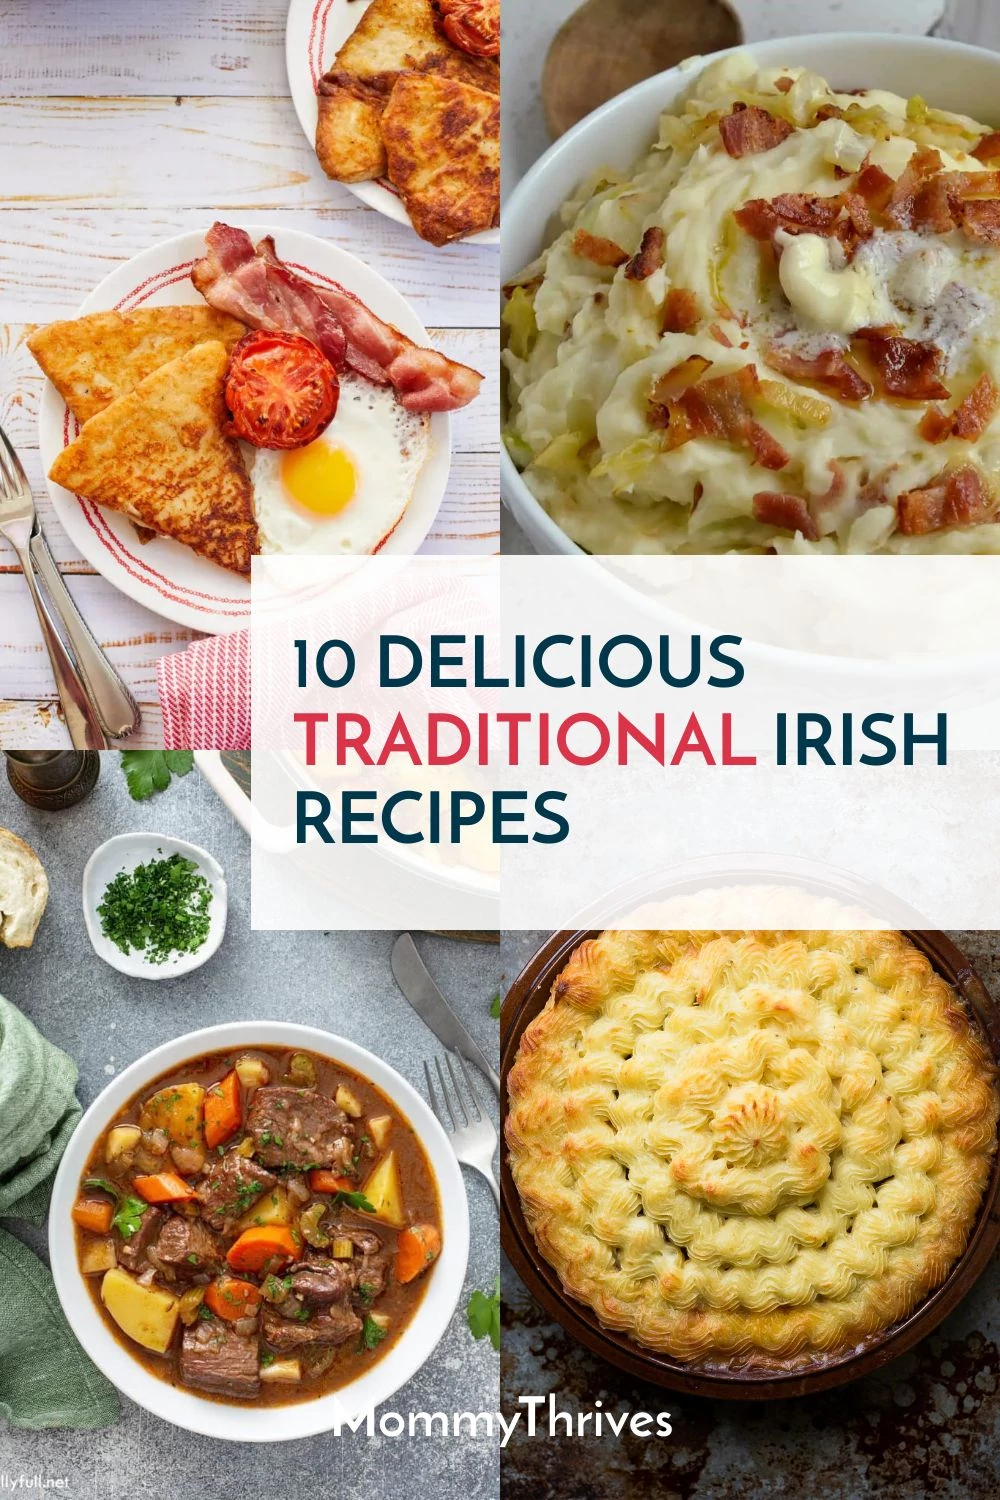 10 Delicious Traditional Irish Recipes - Irish Recipes You Need To Try - Delicious Irish Recipes